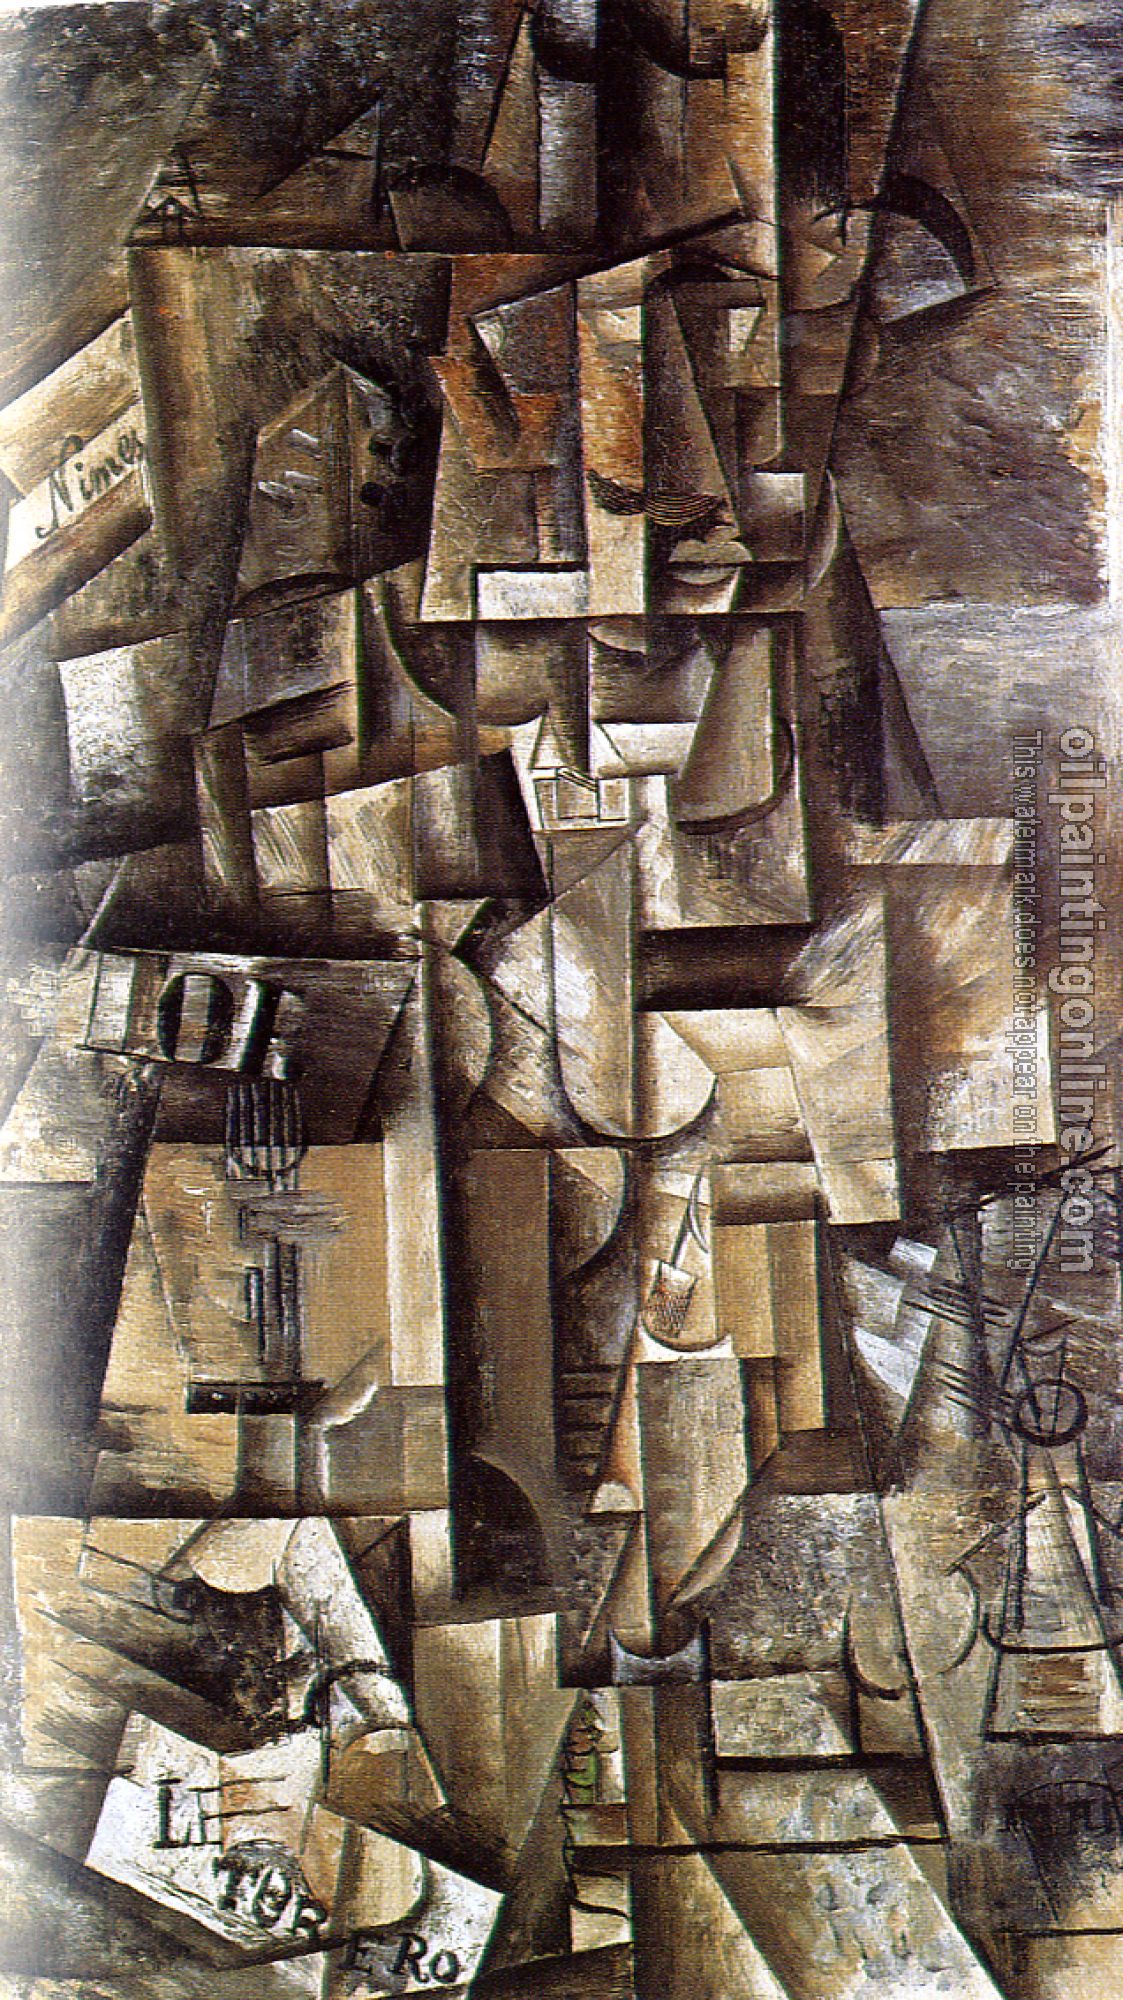 Picasso, Pablo - the aficionado